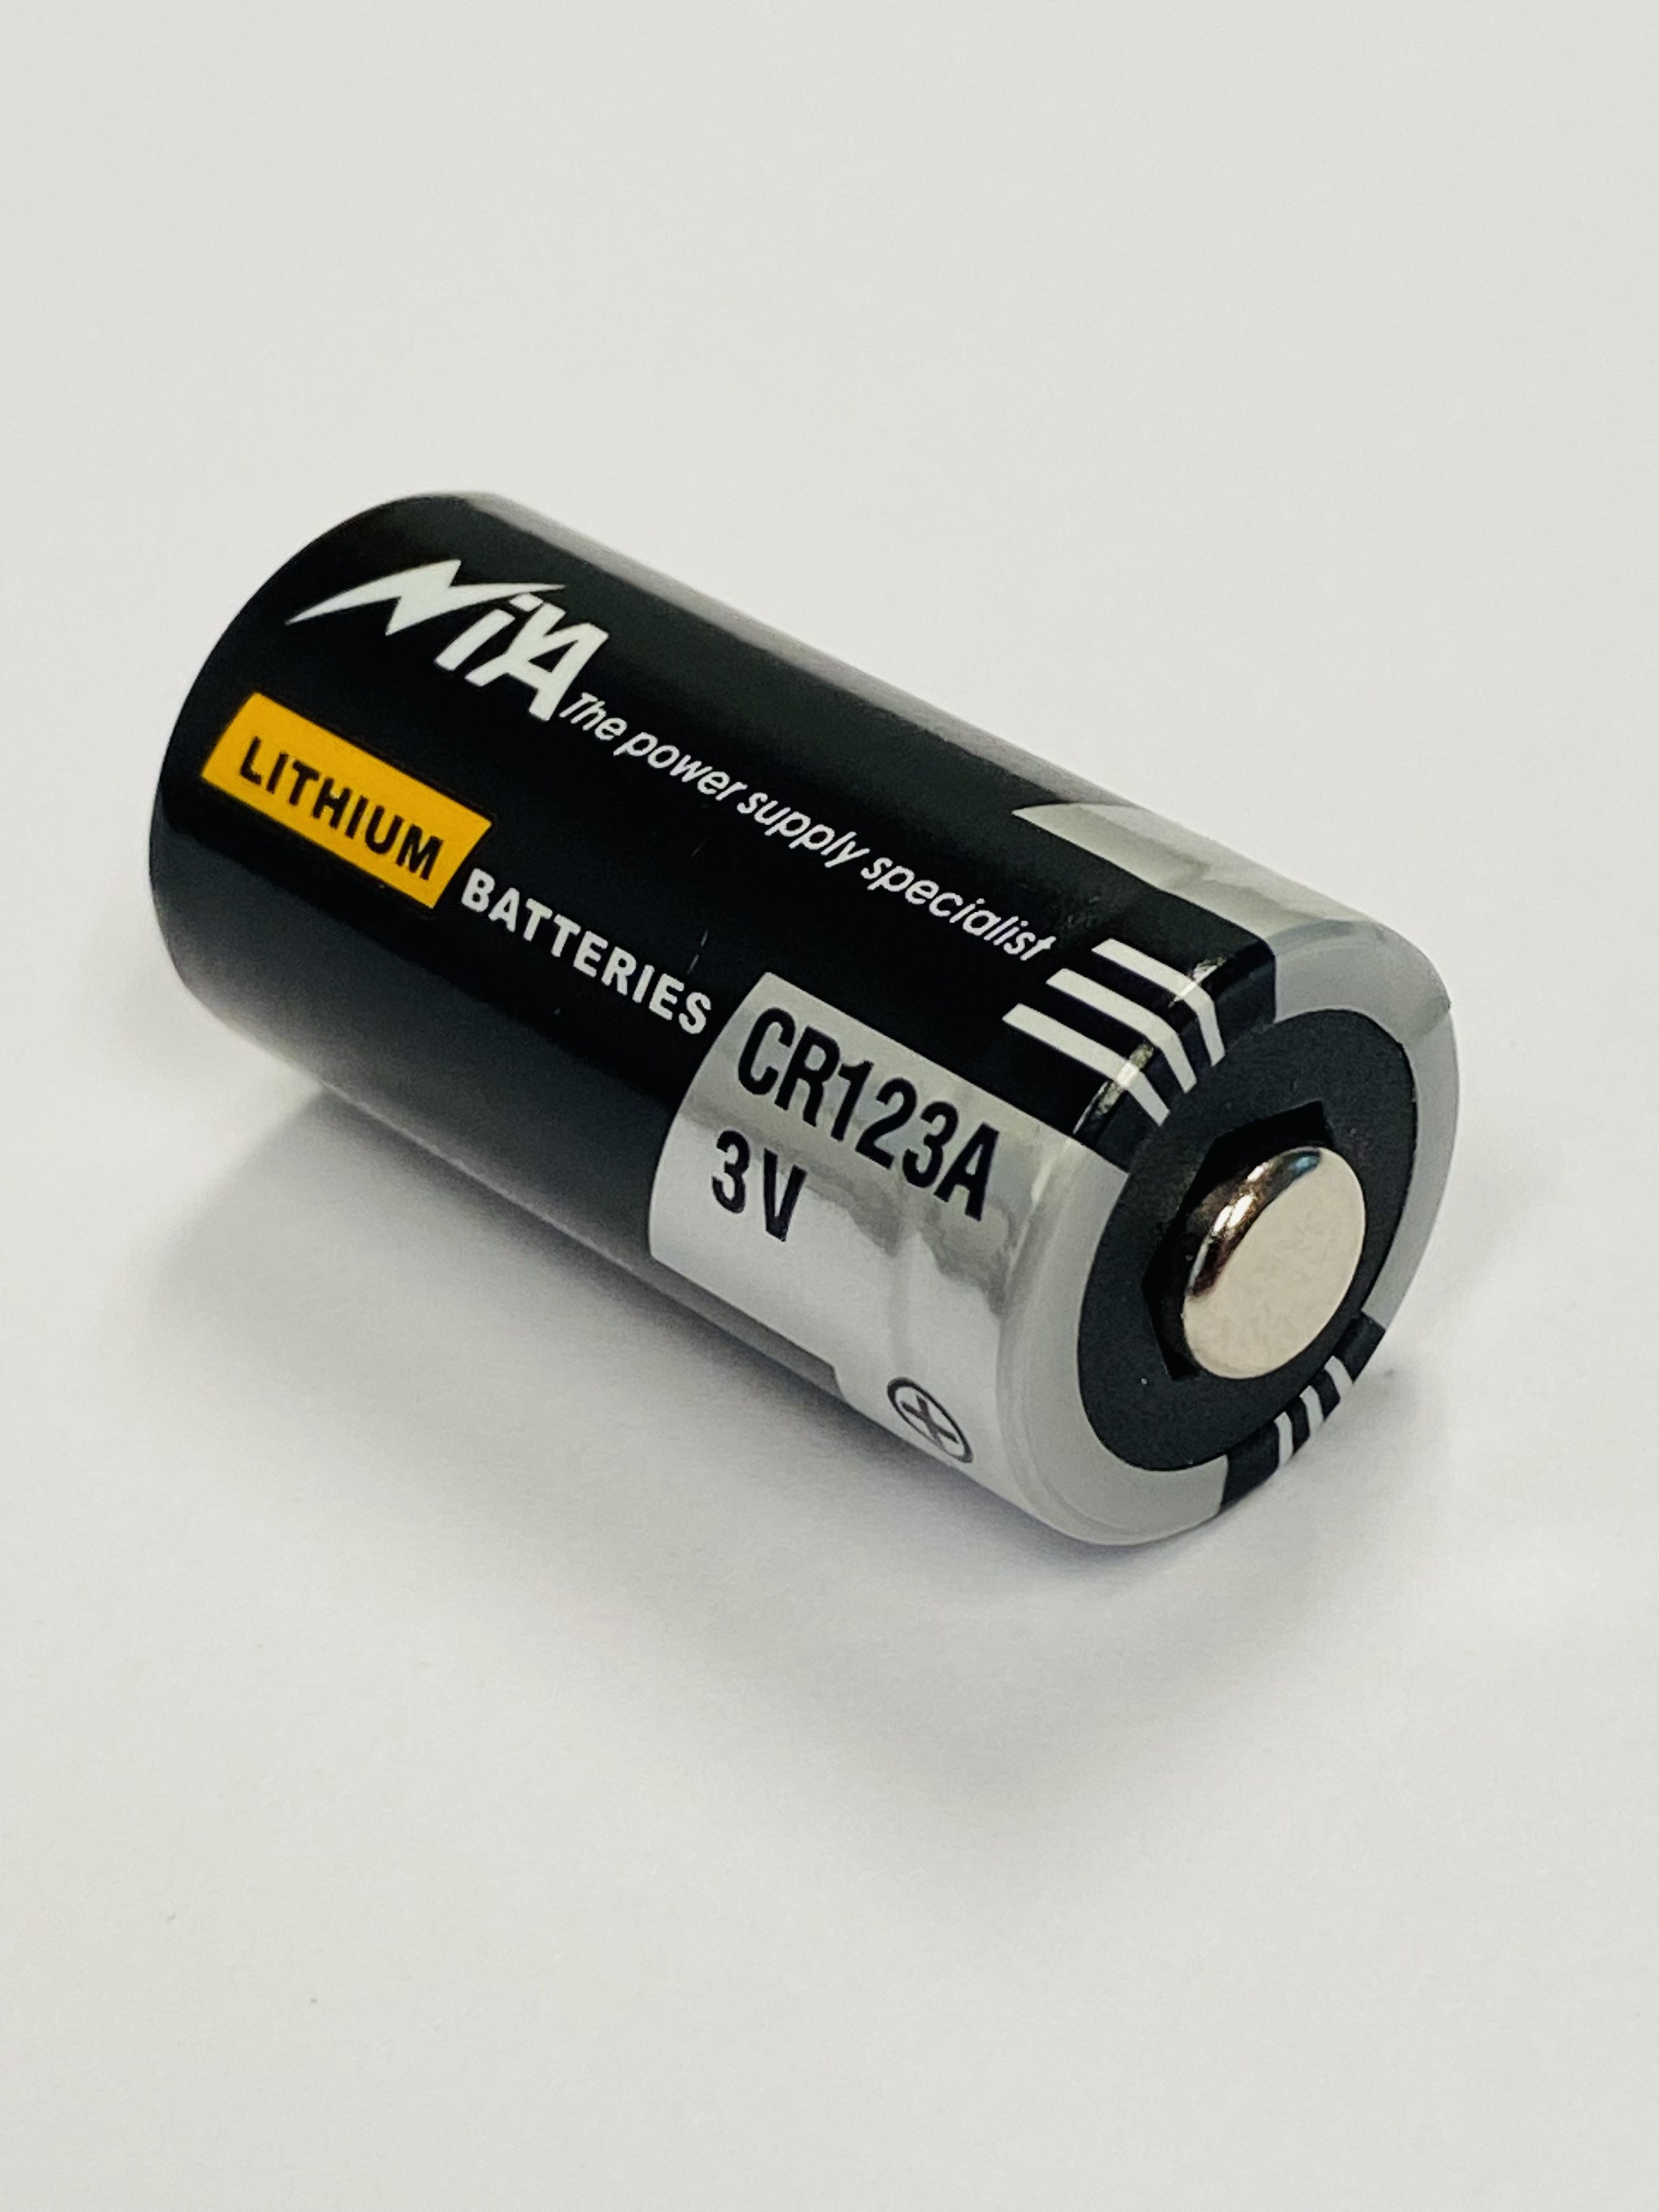 Nova NV-CR123A replacement battery